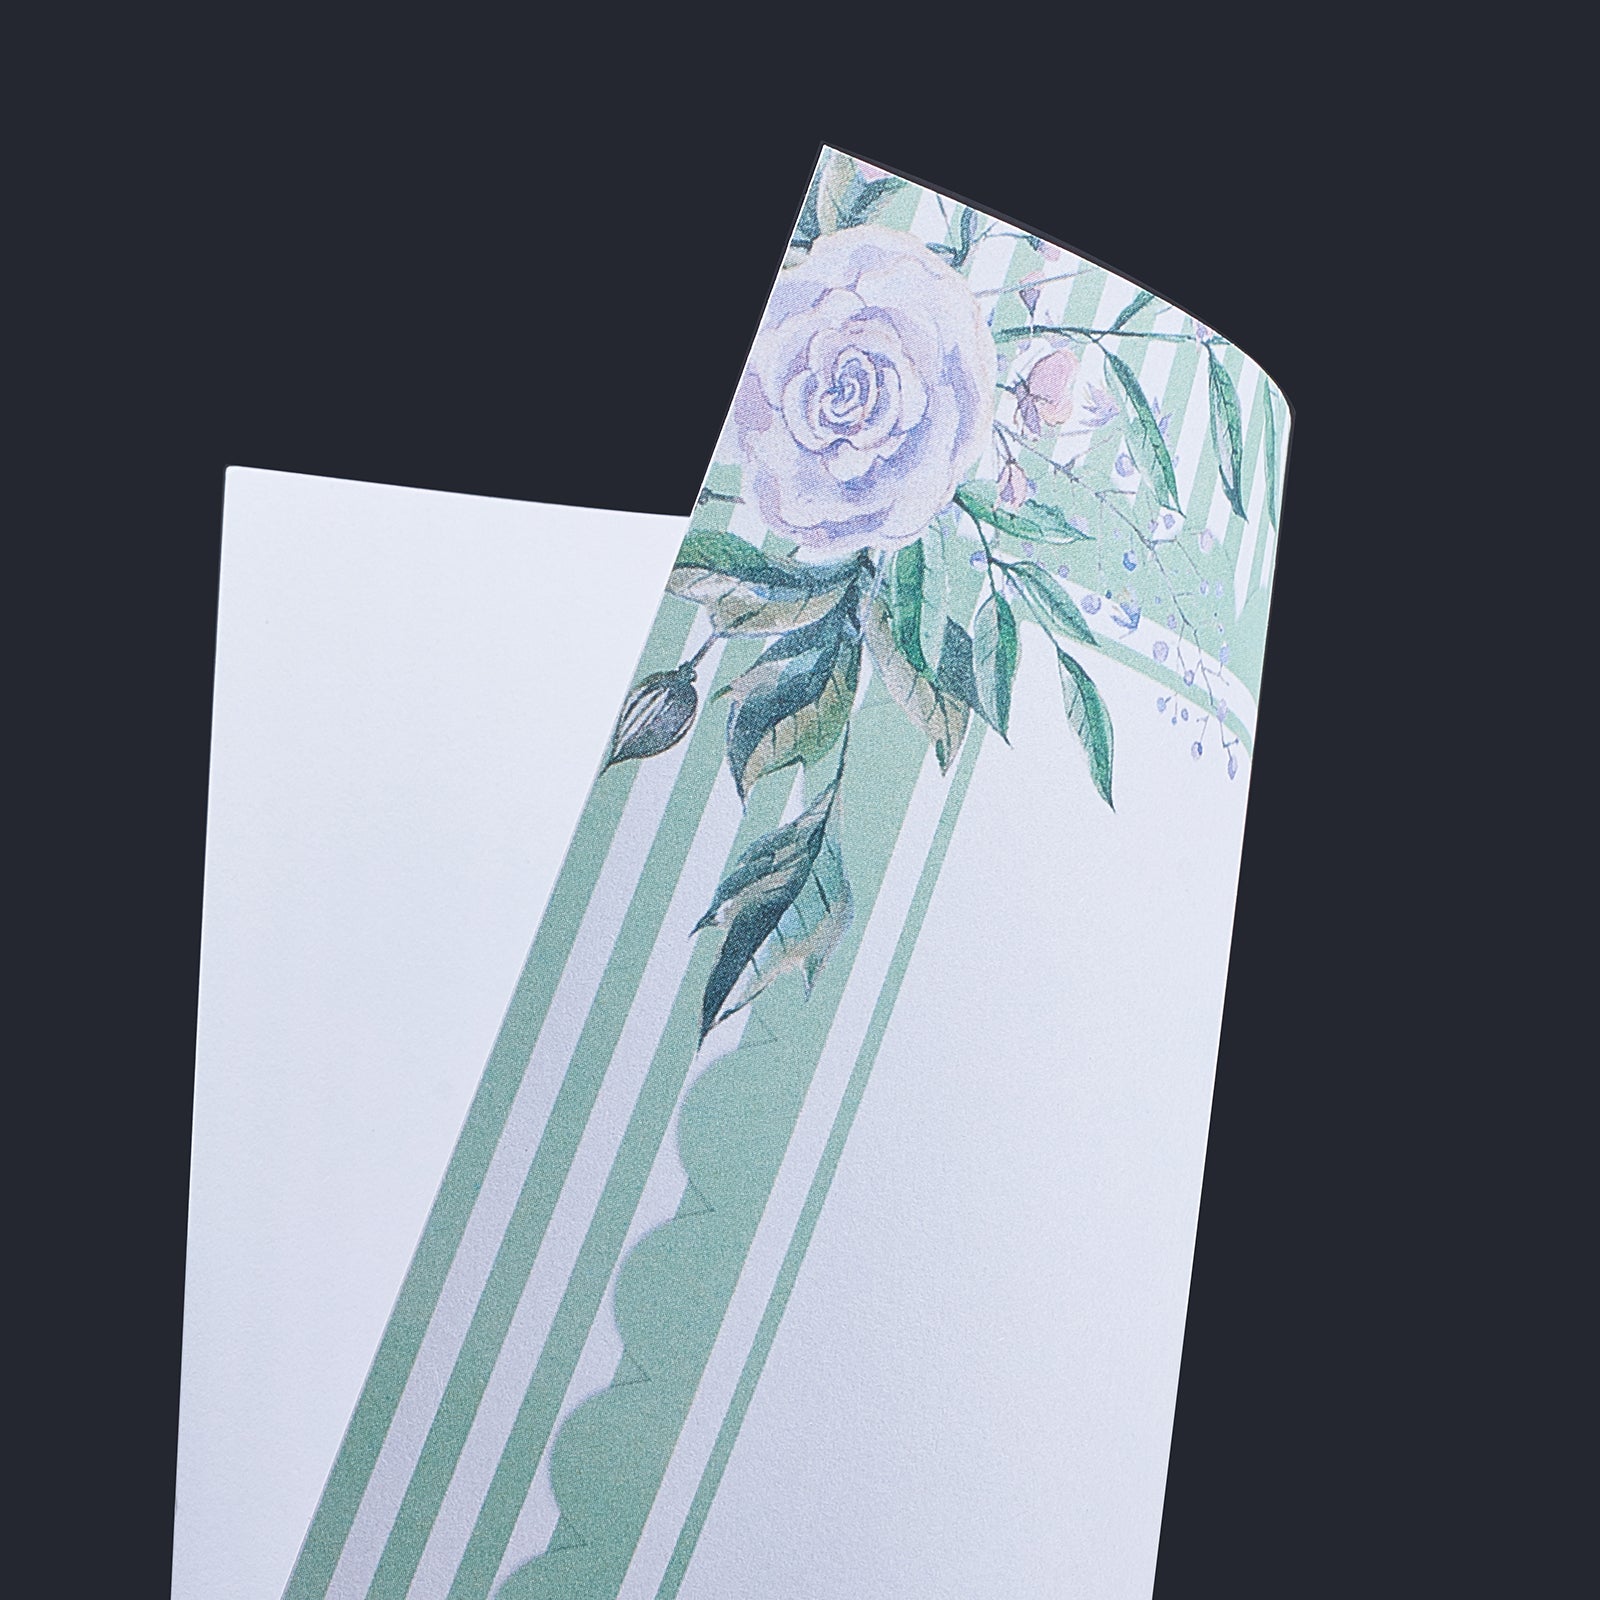 Globleland Scrapbook Paper Pad, for DIY Album Scrapbook, Greeting Card, Background Paper, Mixed Patterns, 152x152x0.1mm, 24sheets/set.